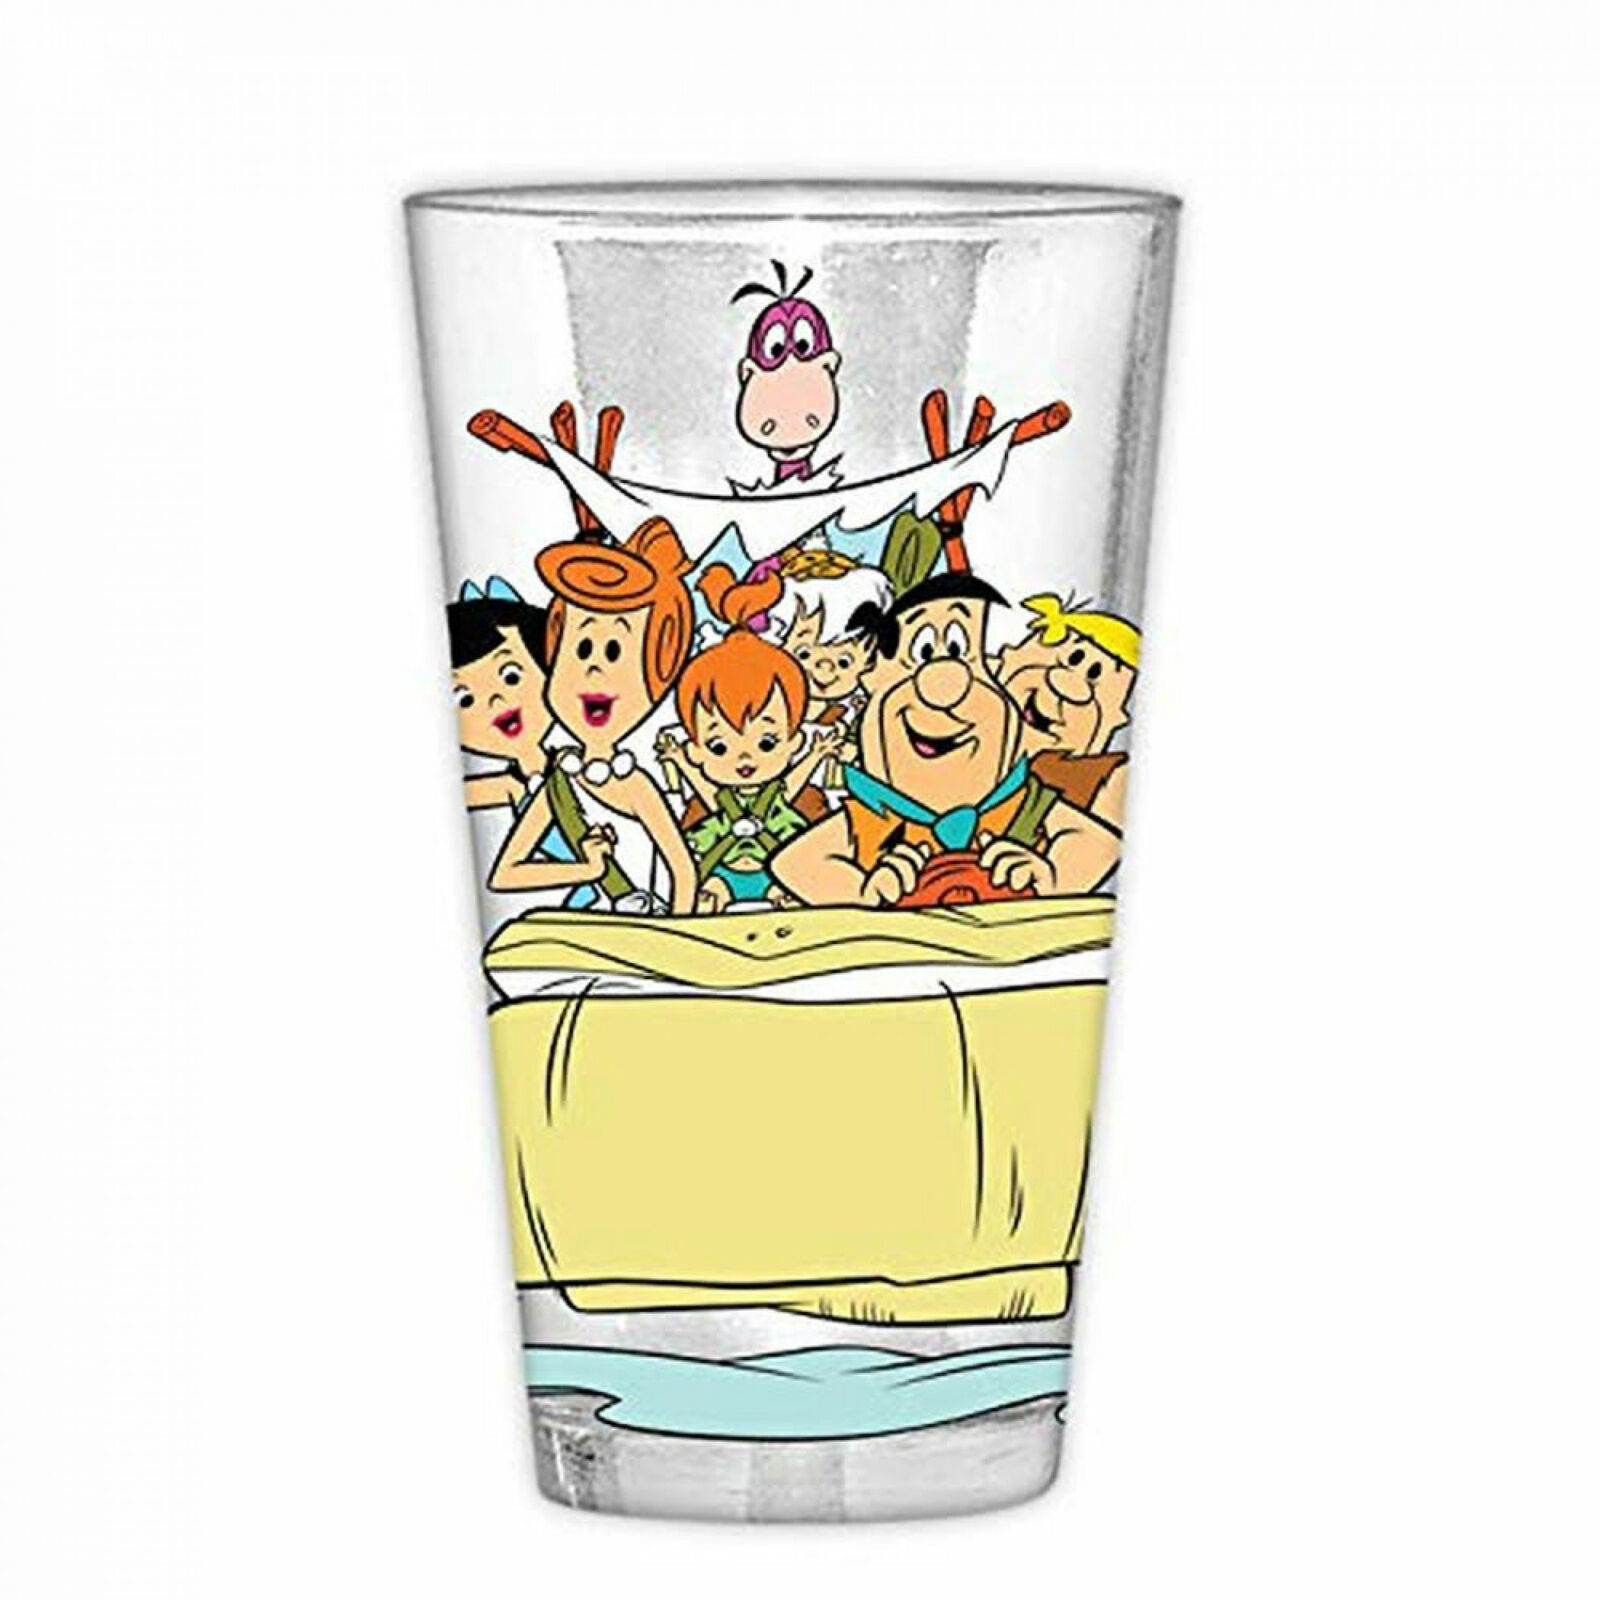 Flintstones 16 Ounce Pint Glass Clear - Mugs